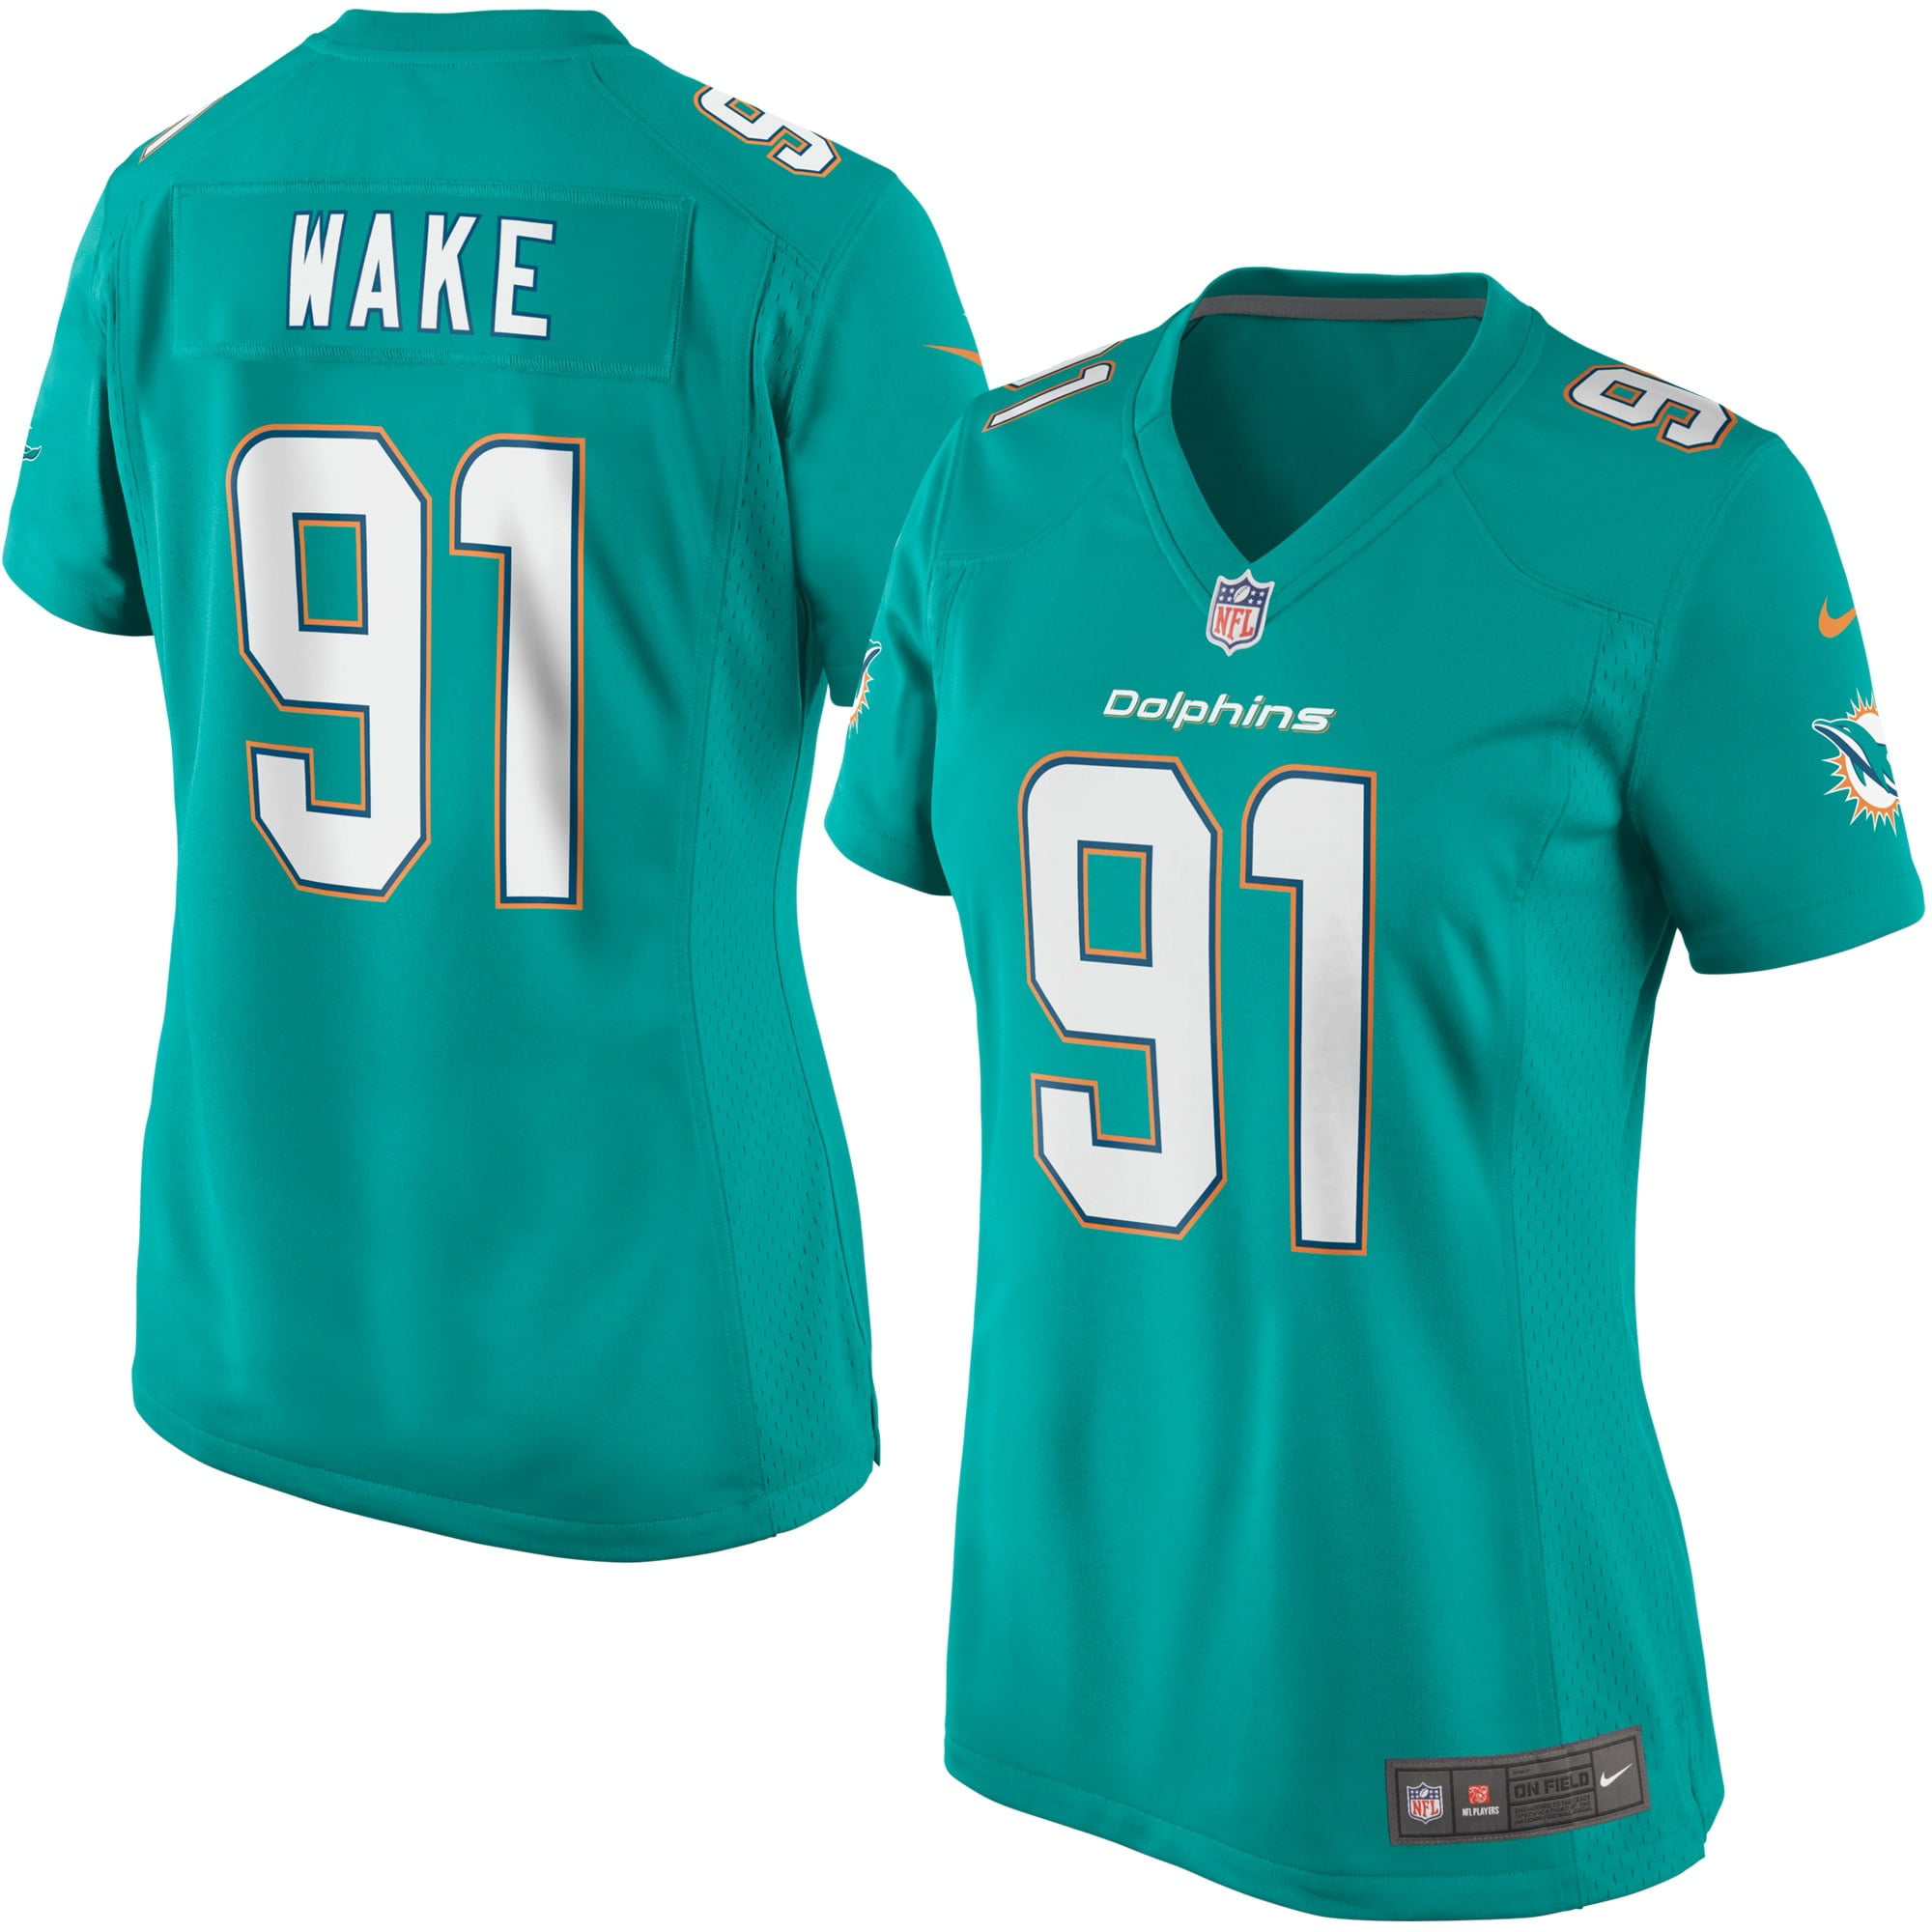 Cameron Wake Miami Dolphins Nike Women's Game Jersey - Aqua - Walmart.com